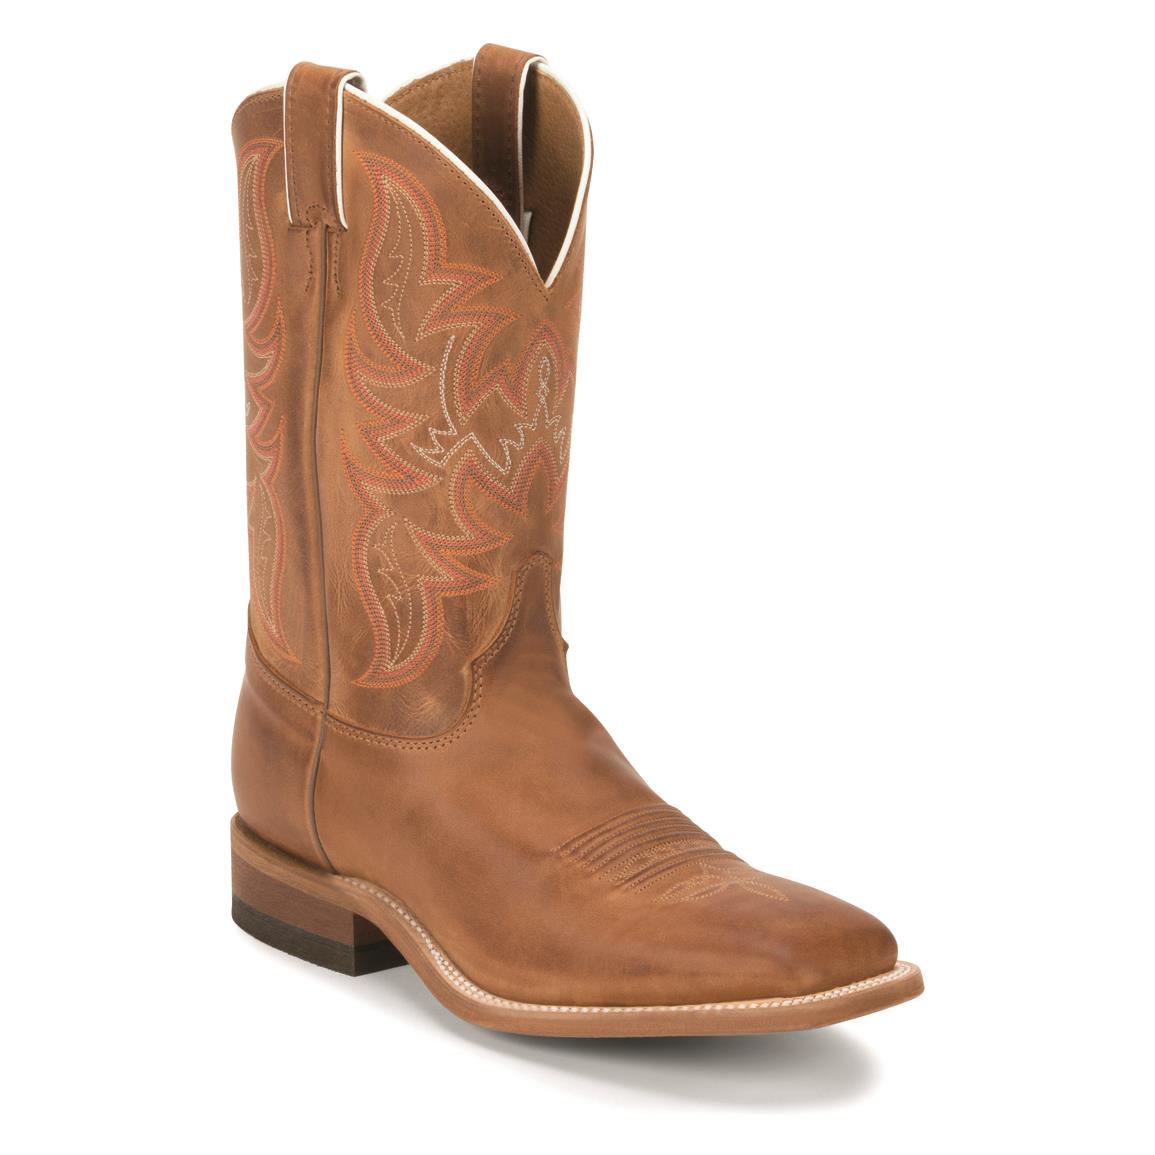 Justin Men's Austin Western Boots, Distressed Cognac